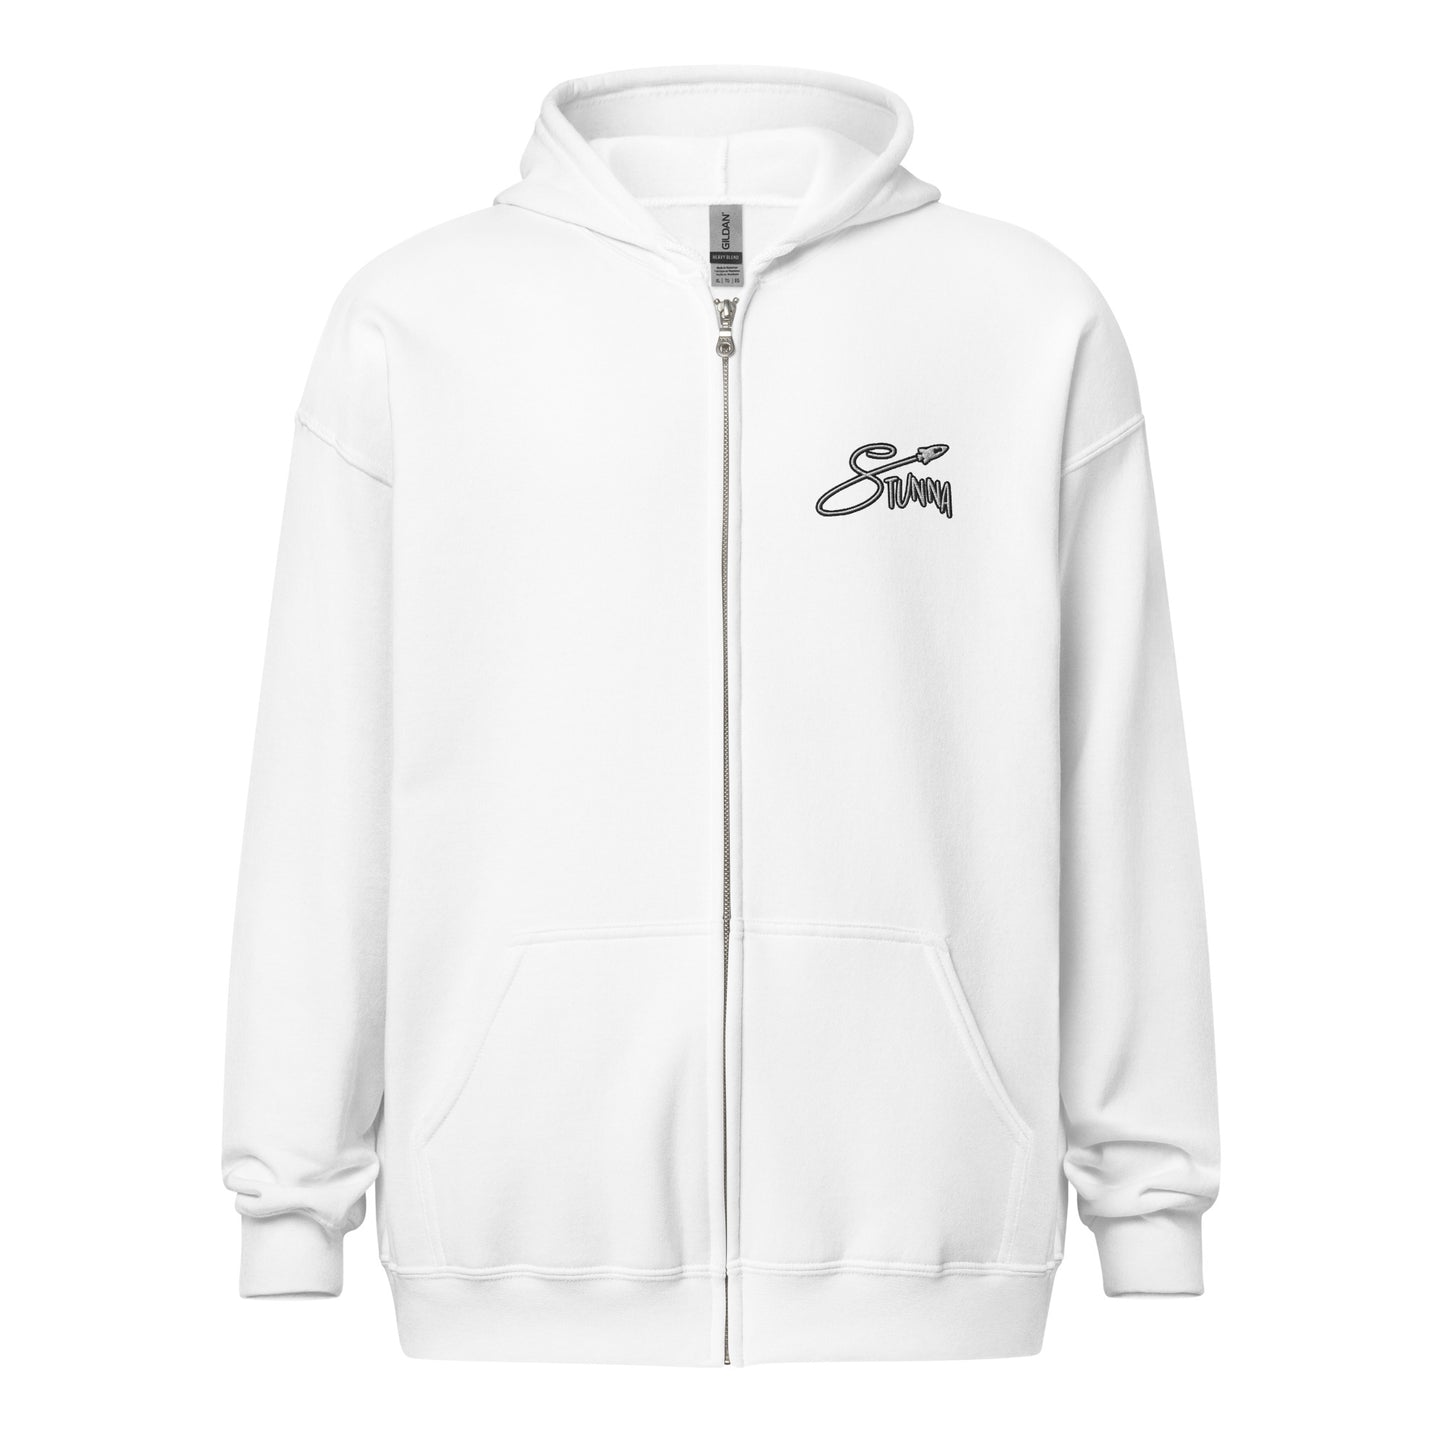 Stunna Logo Zip hoodie